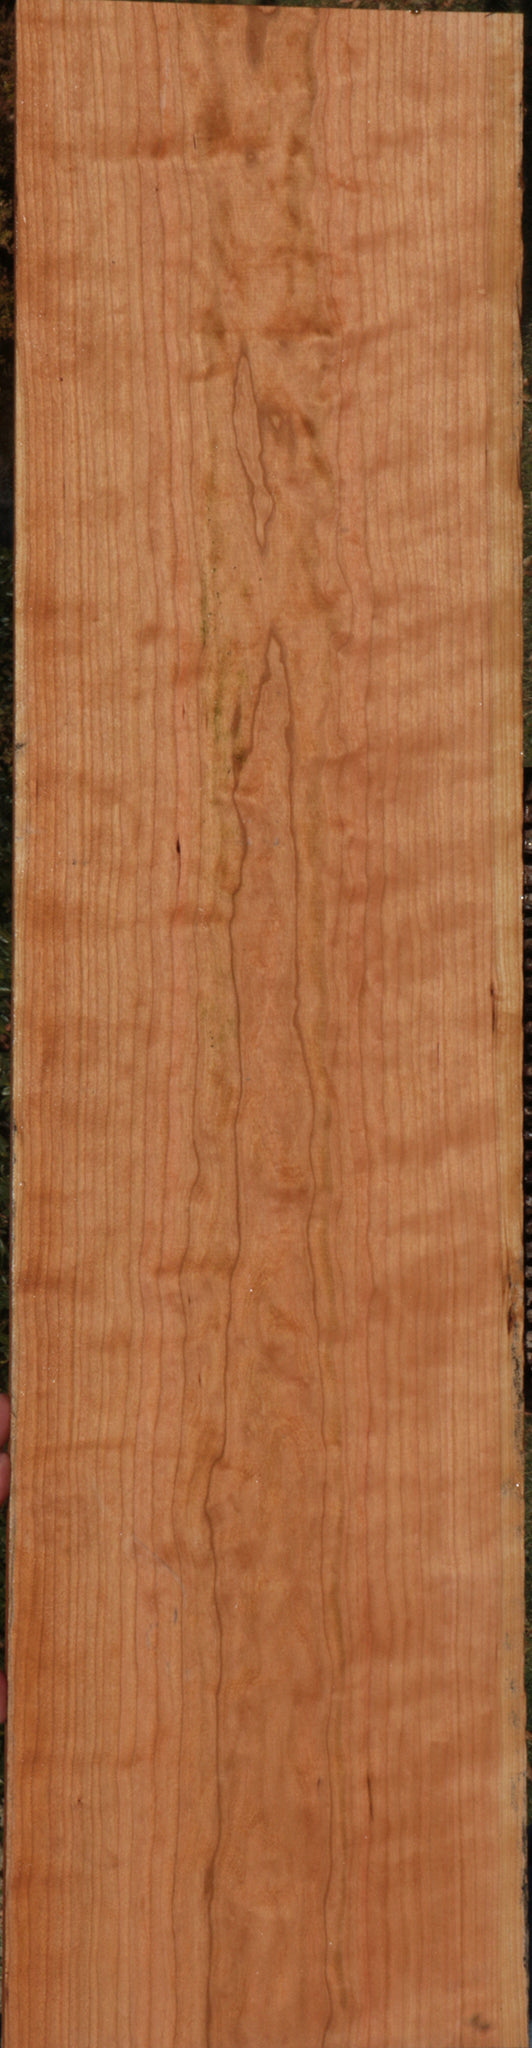 Cherry wood strips